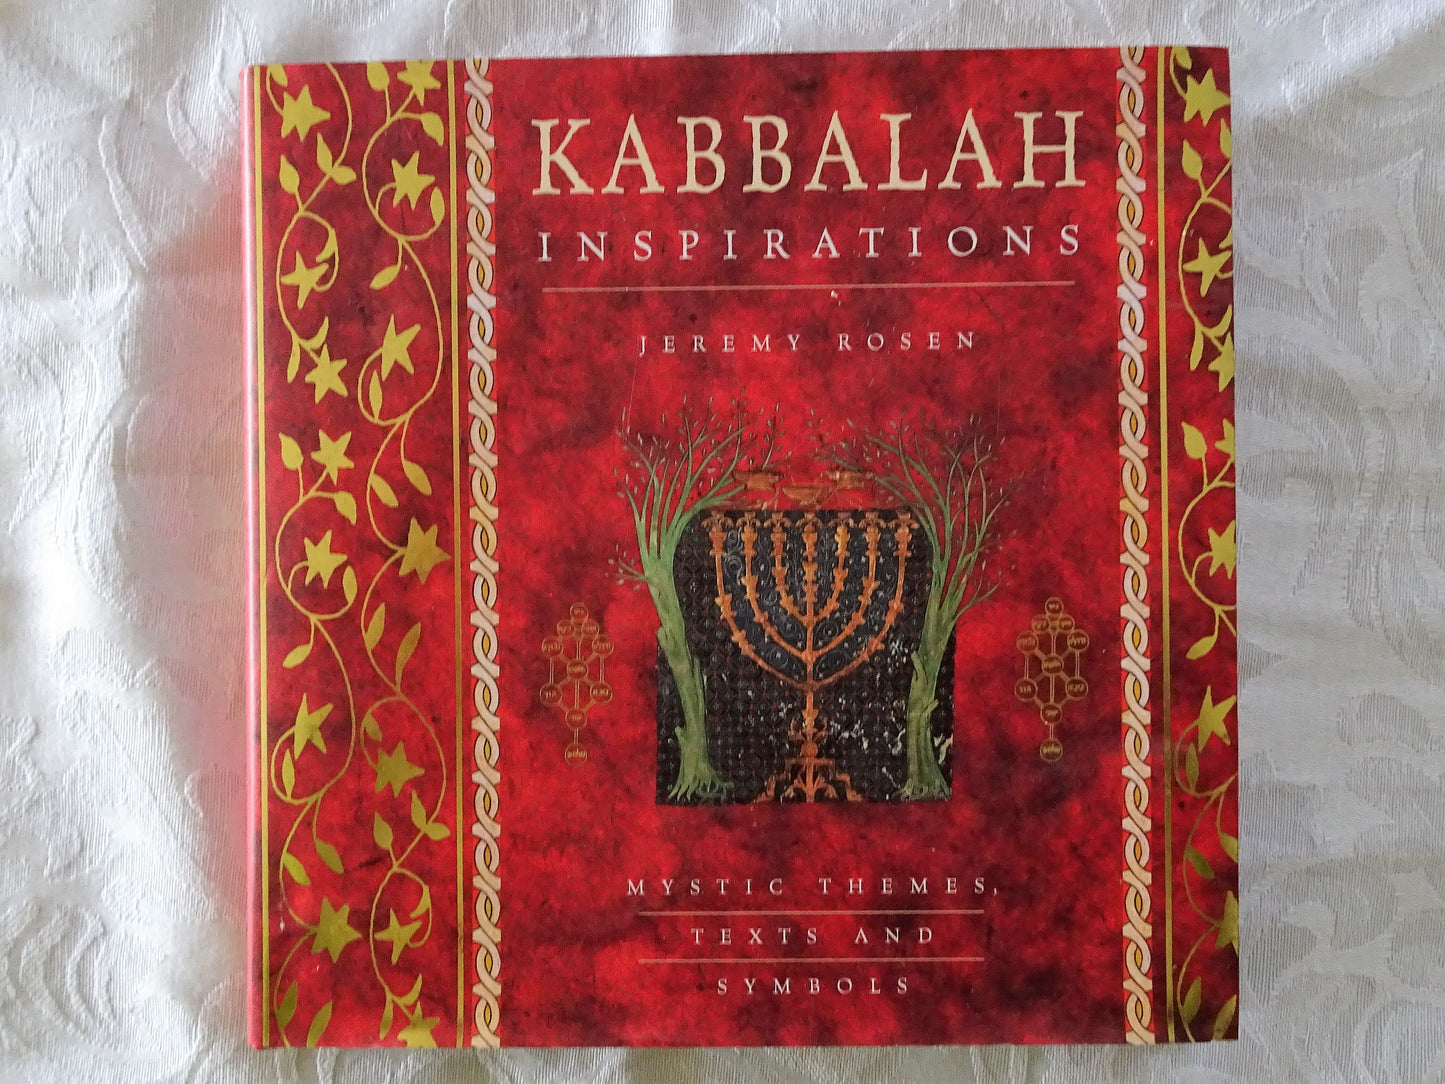 Kabbalah Inspirations by Jeremy Rosen